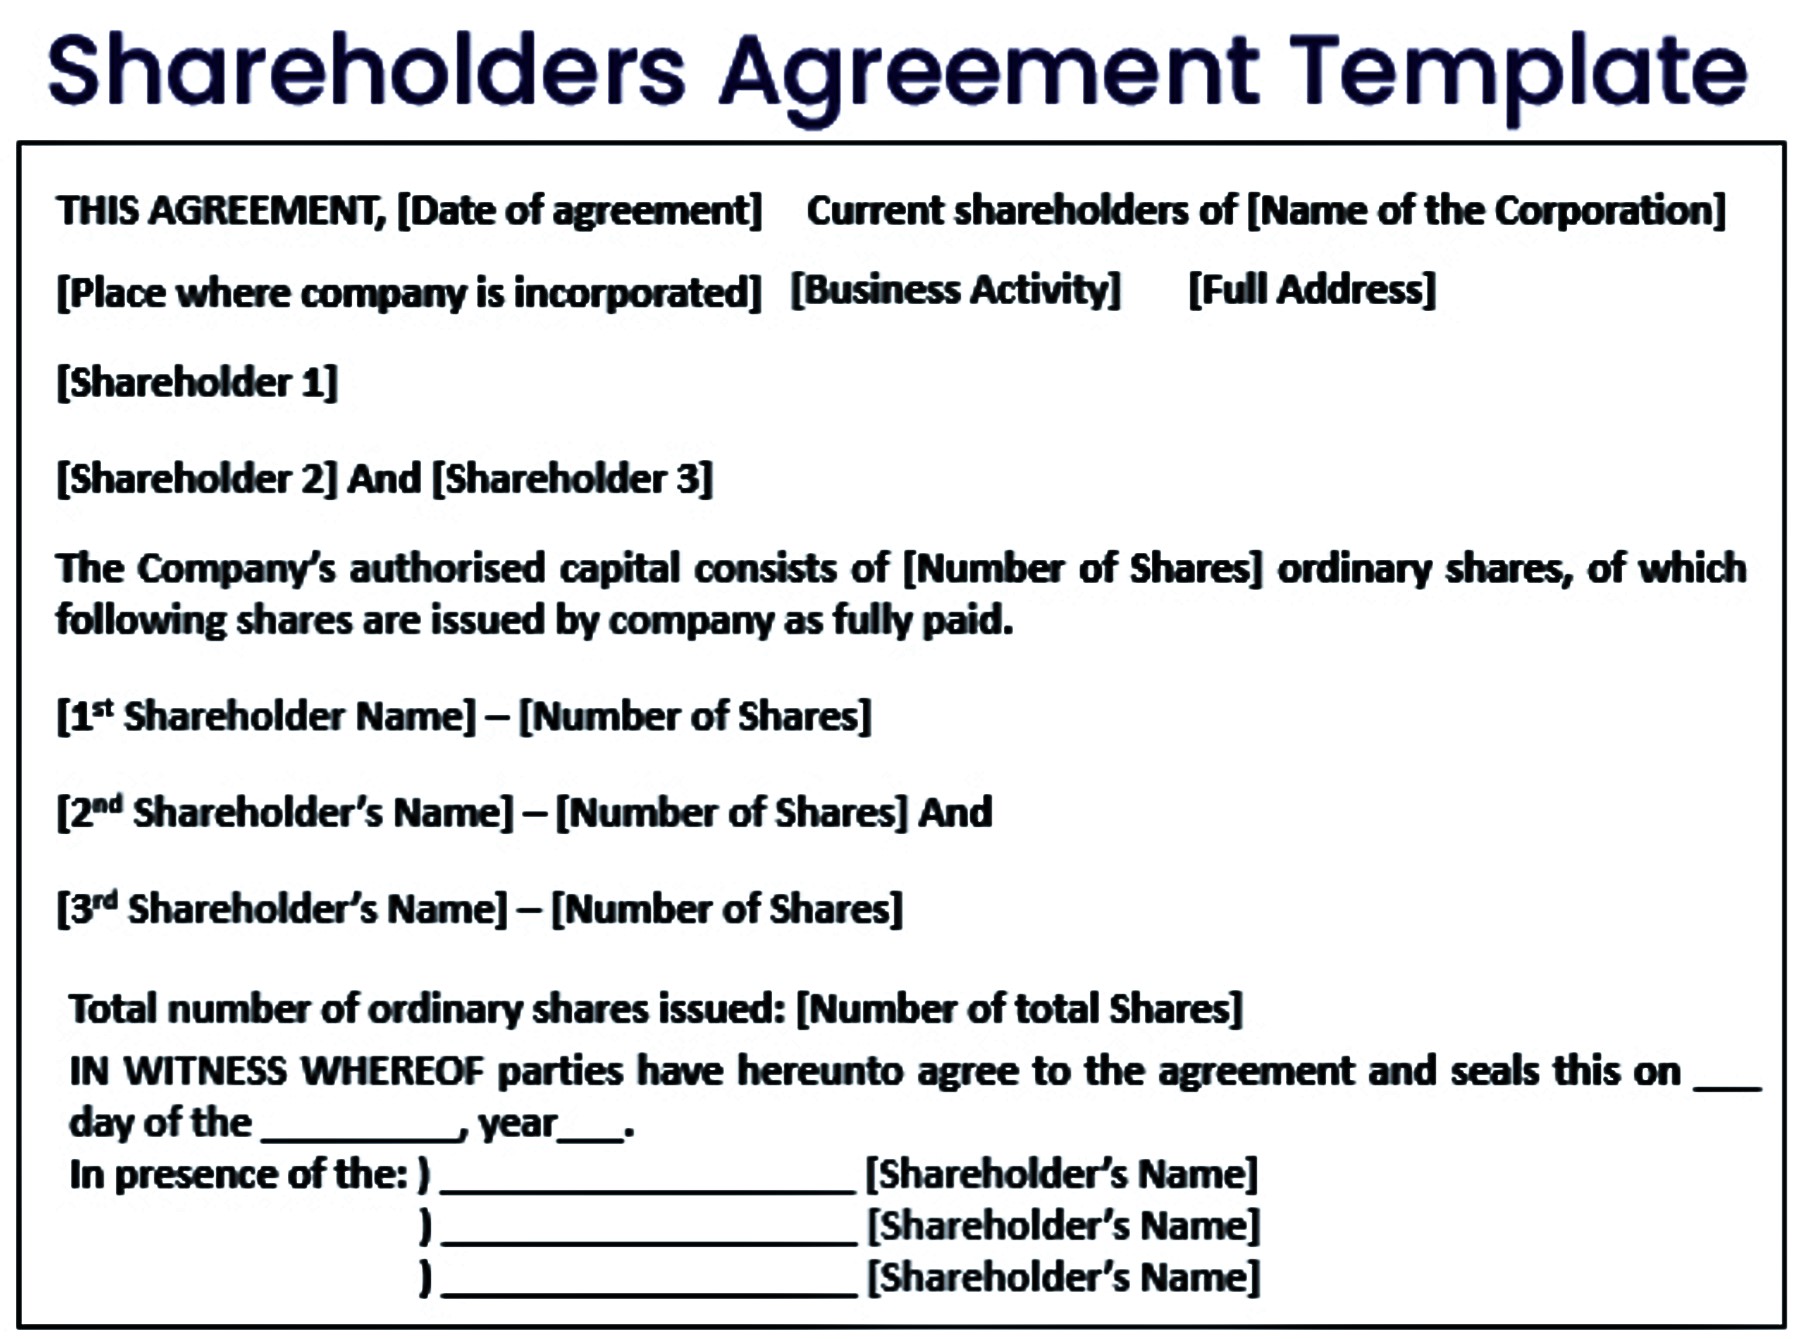 Shareholders' Agreement Template